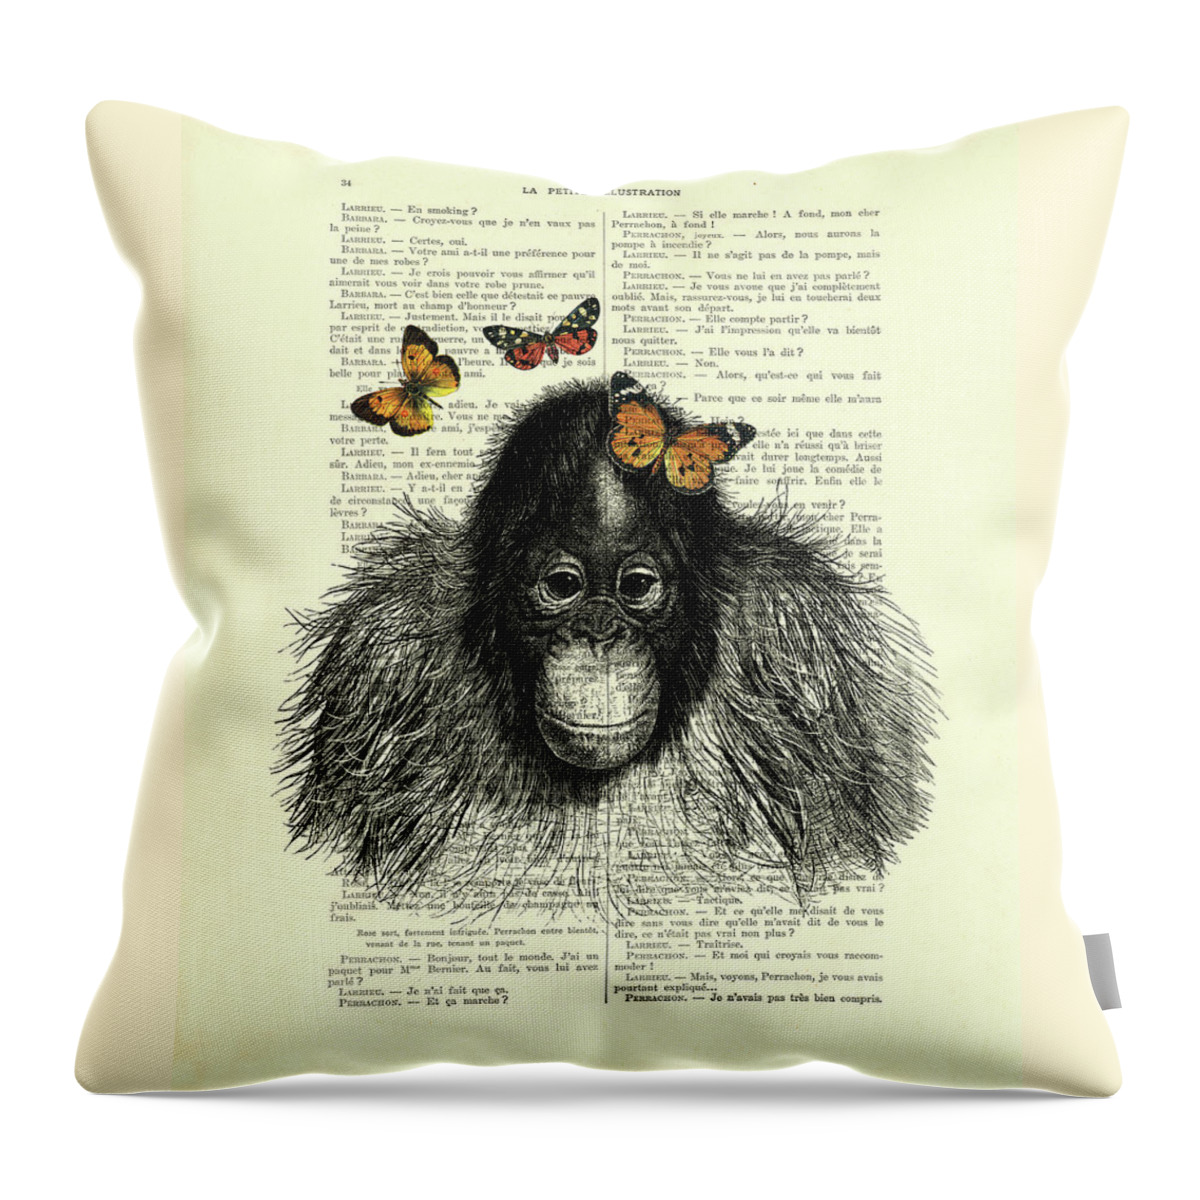 Orangutang Throw Pillow featuring the digital art Baby orangutang with butterflies by Madame Memento